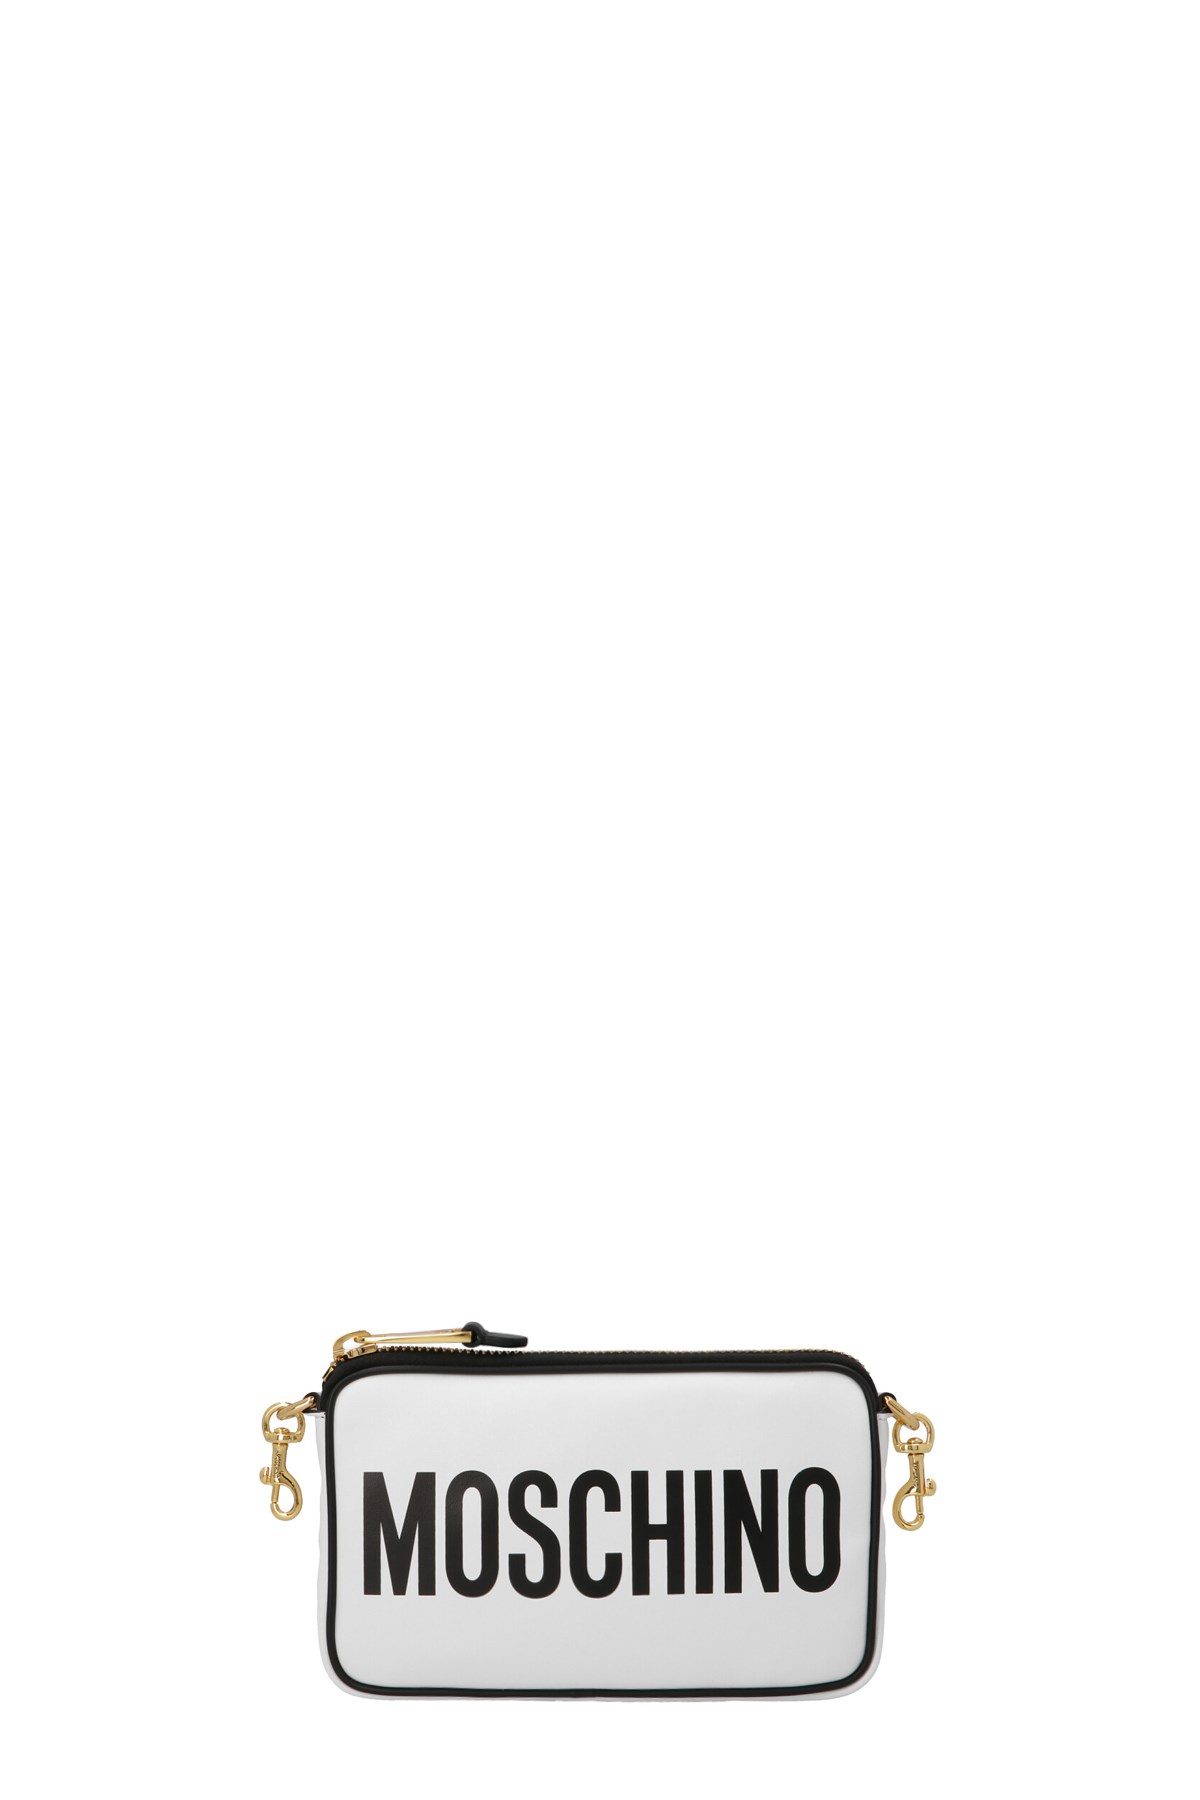 MOSCHINO Logo Crossbody Bag